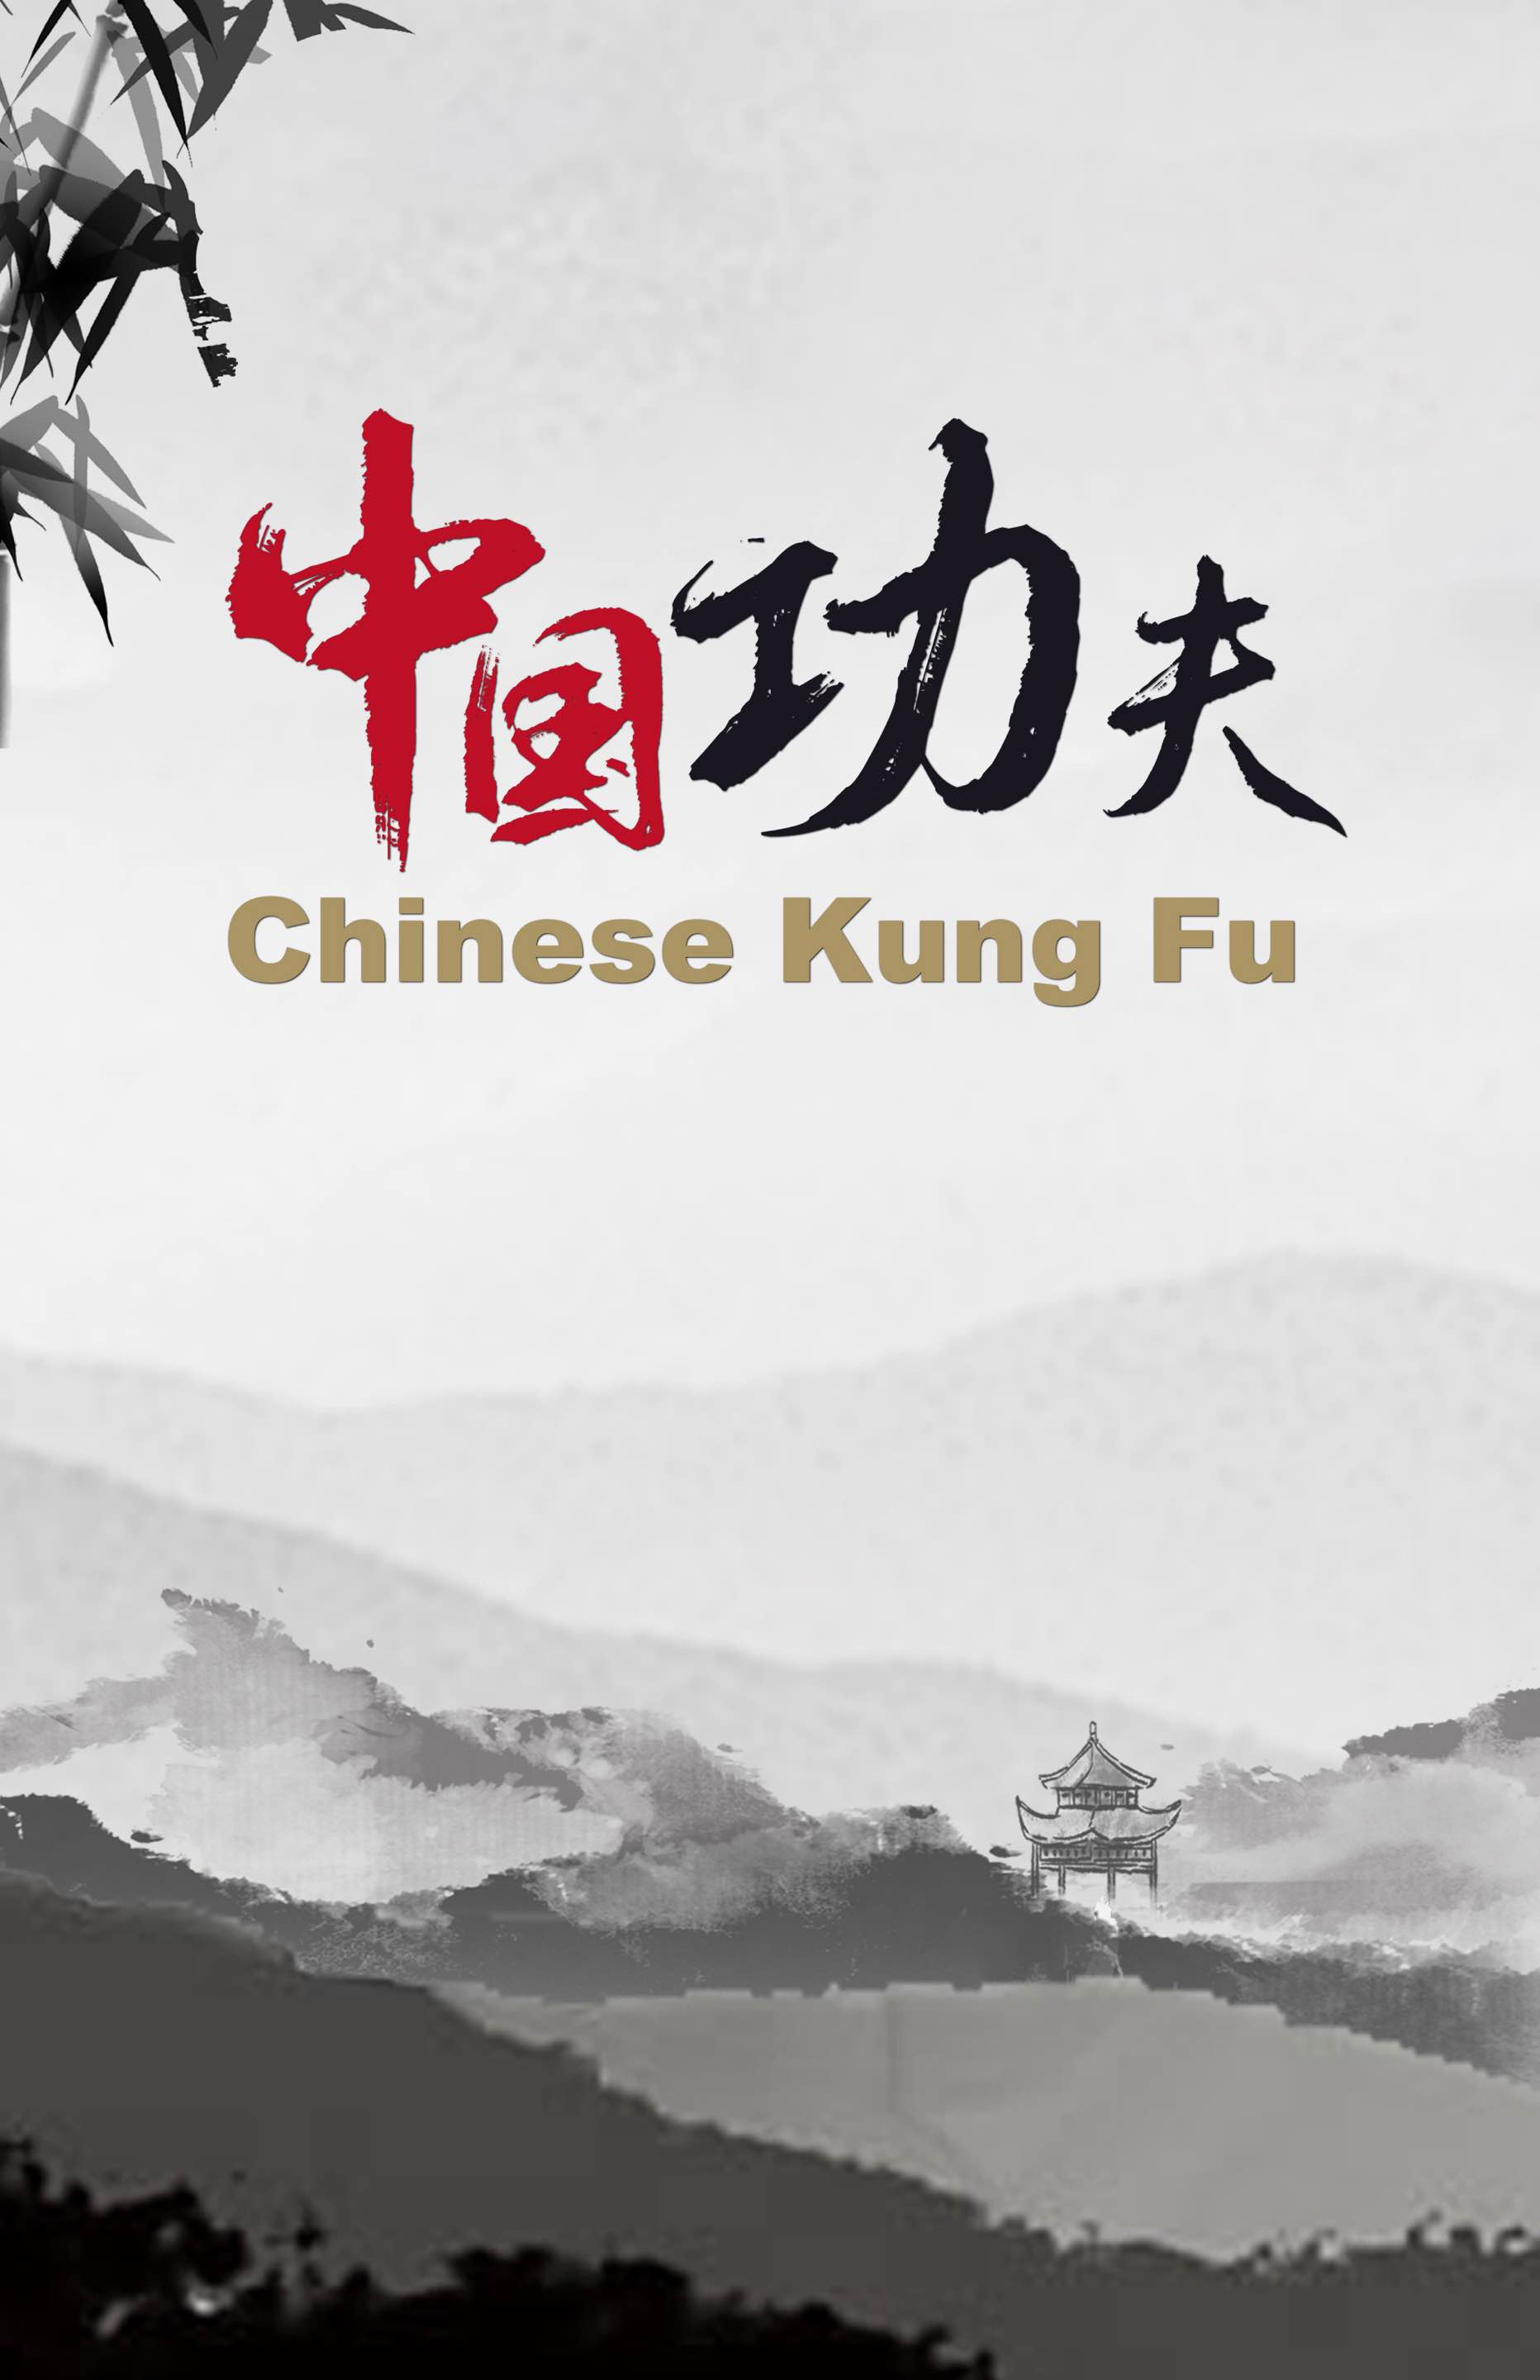  Chinese kung fu